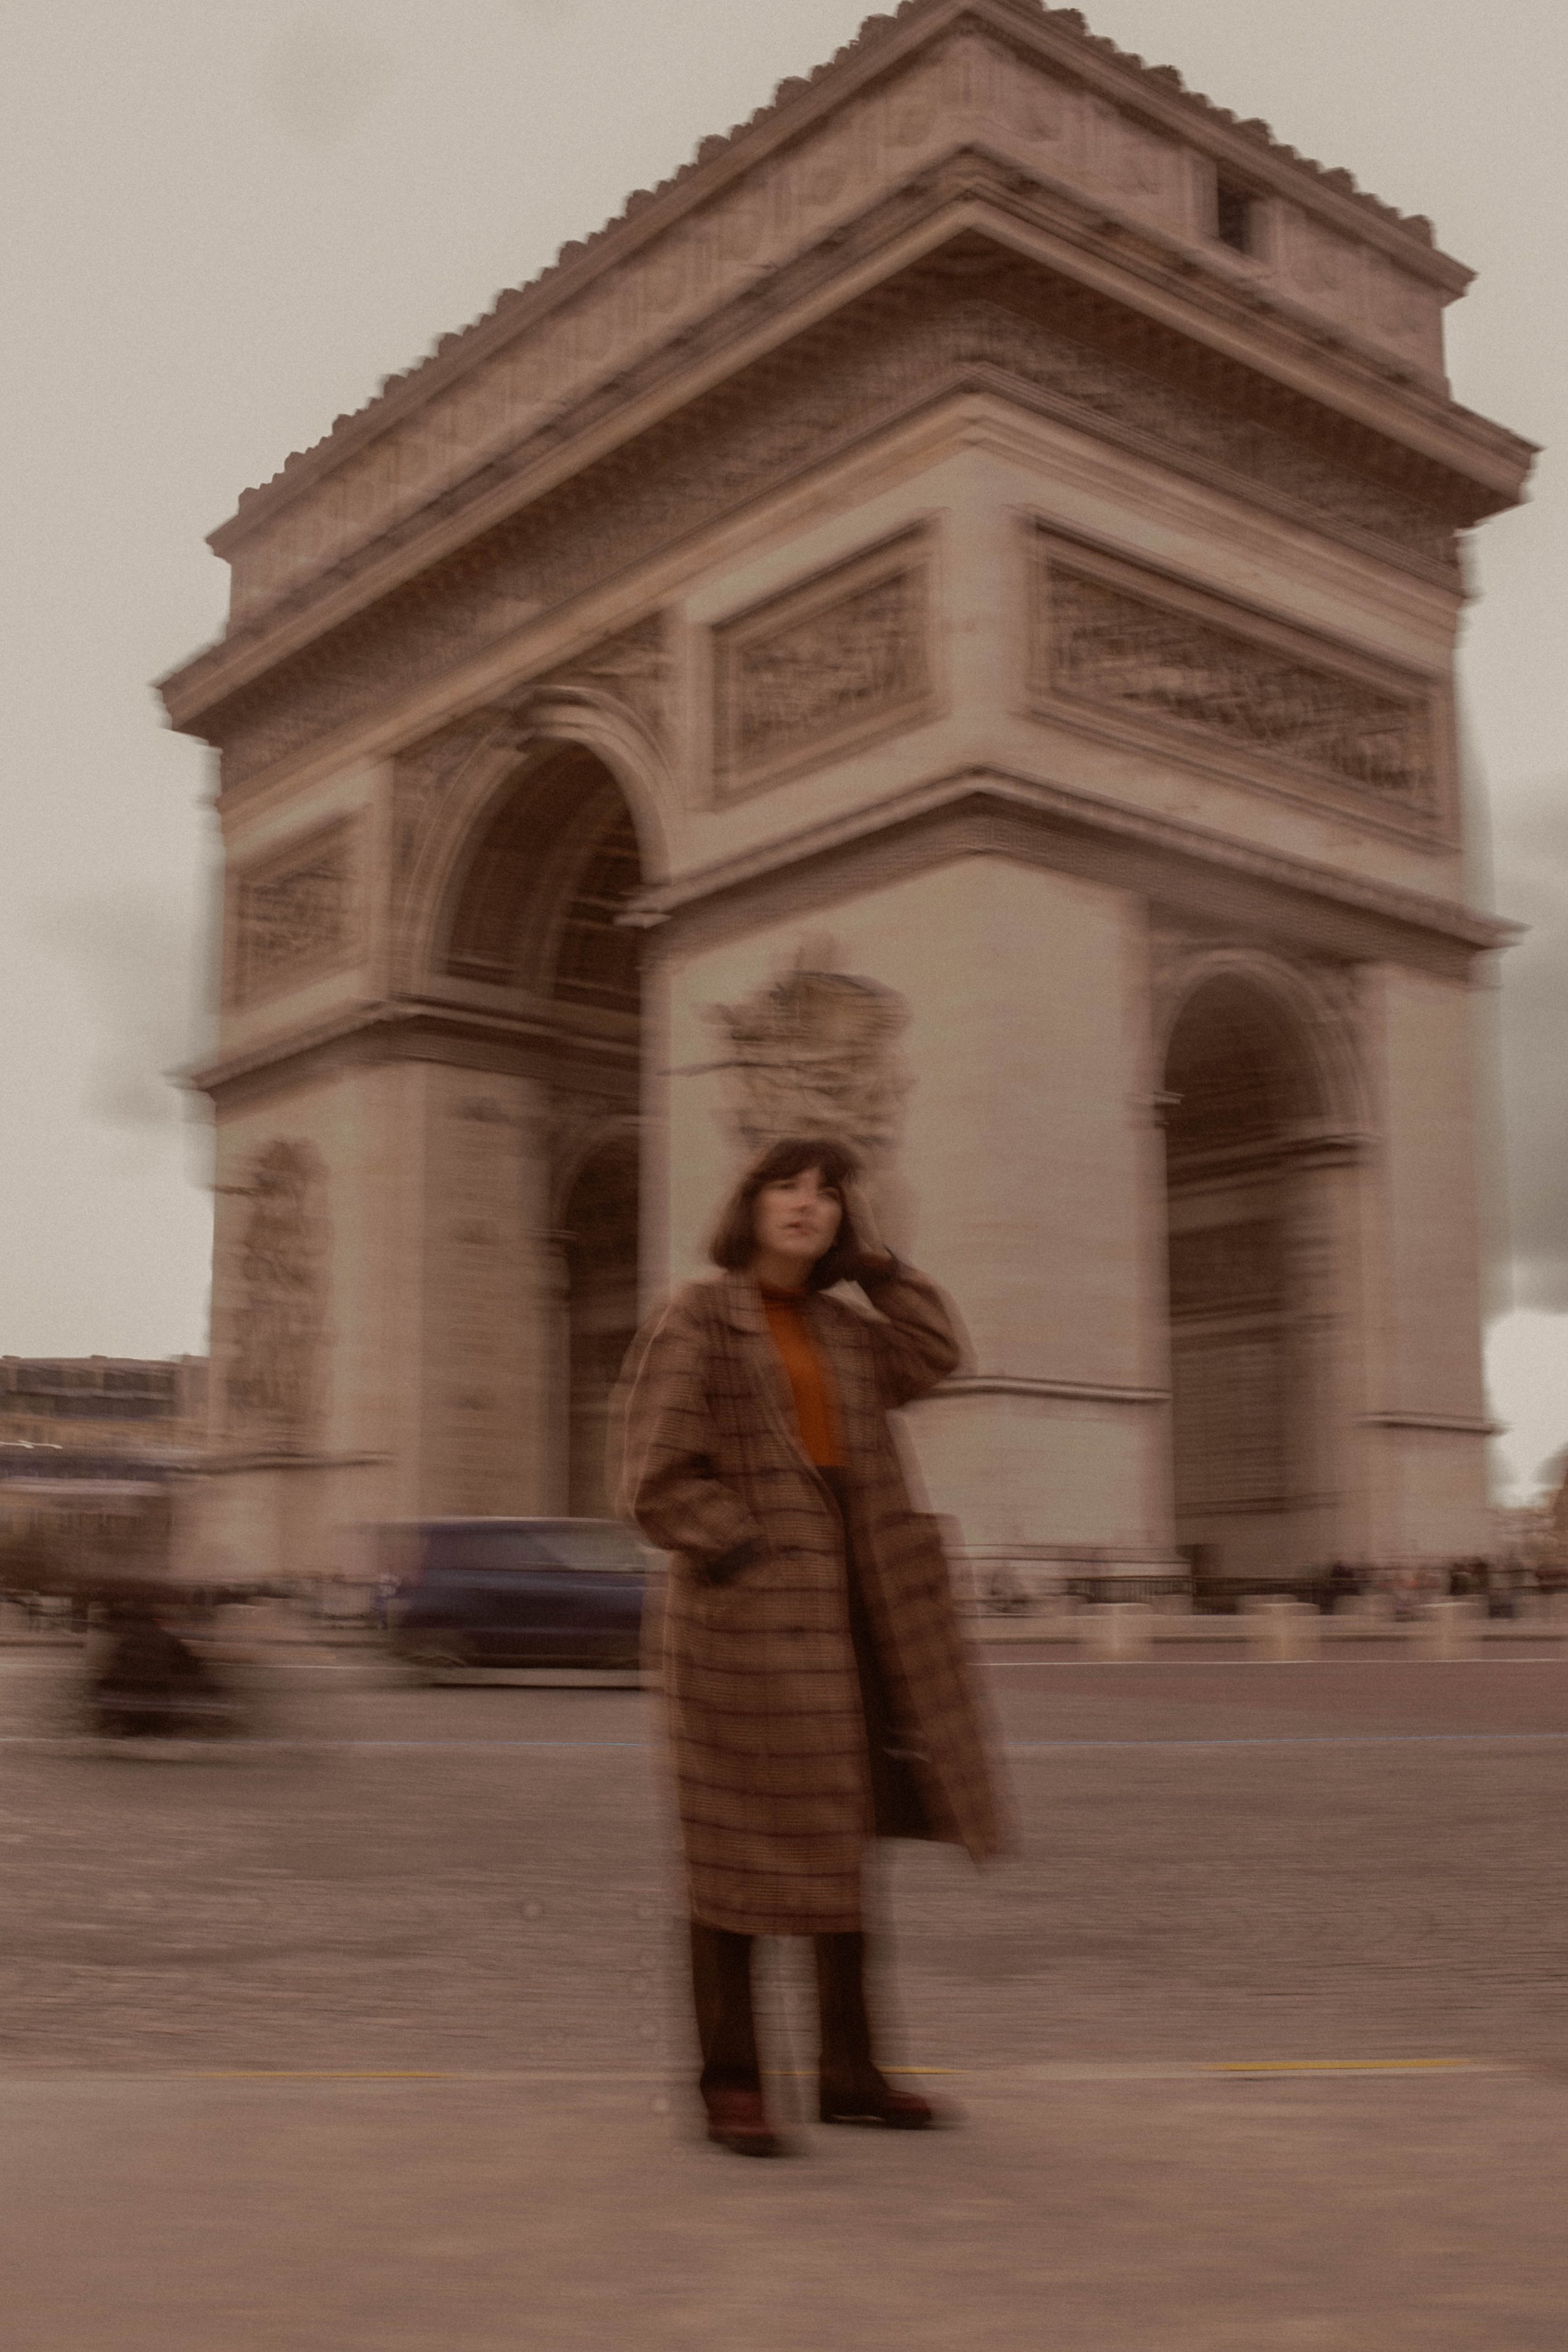 blurry image of woman in coat standing in front of arc de triumph in Paris